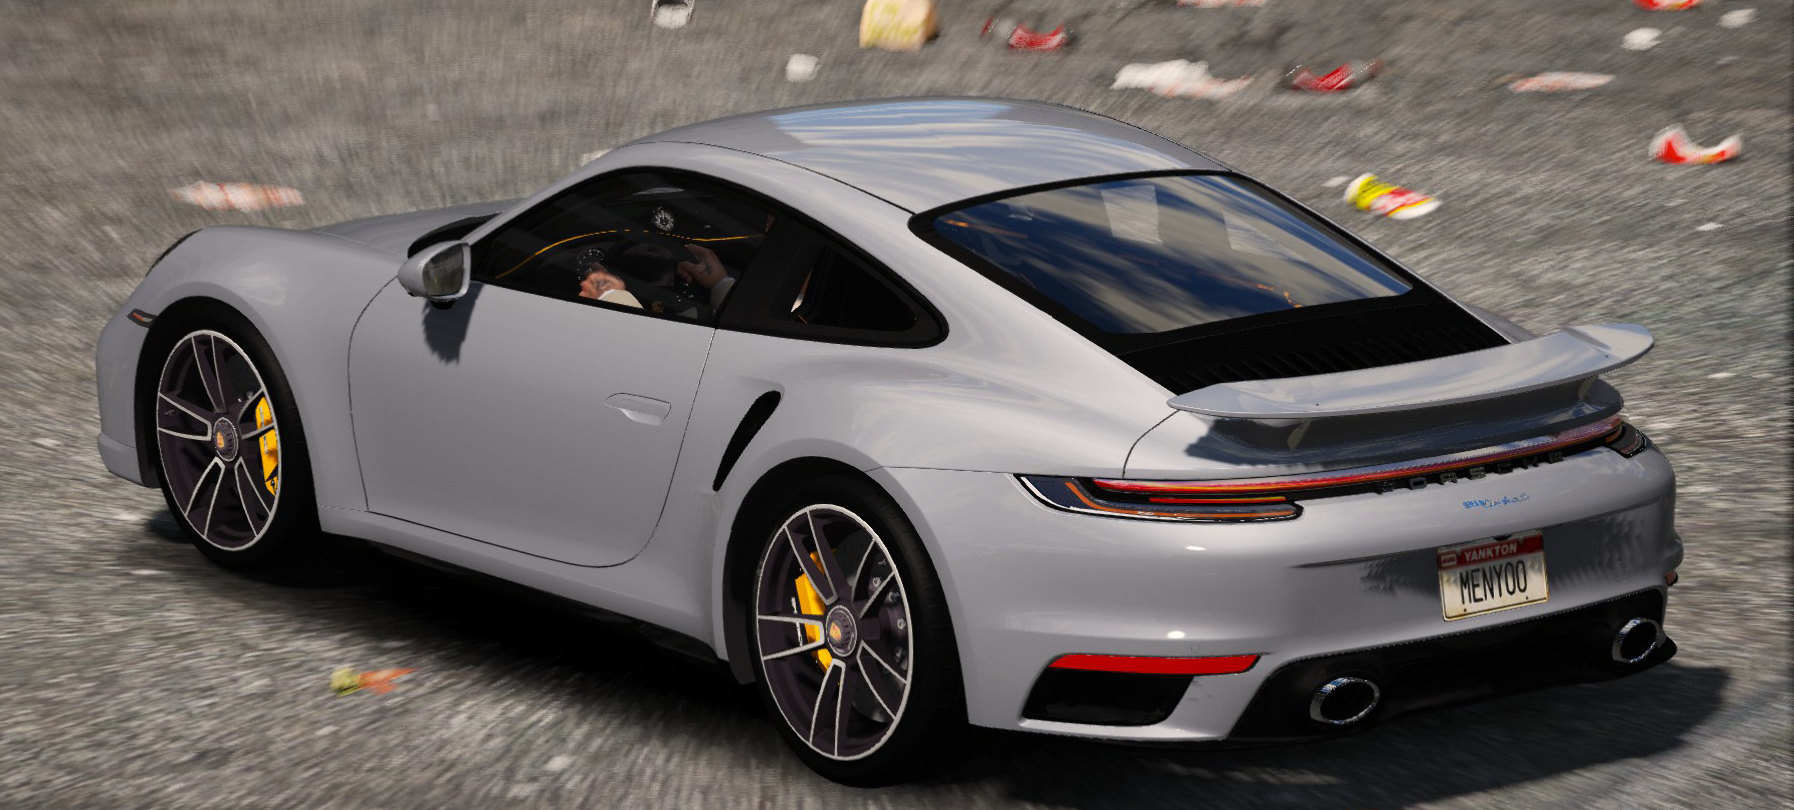 Porsche 911 turbo s для гта 5 фото 3